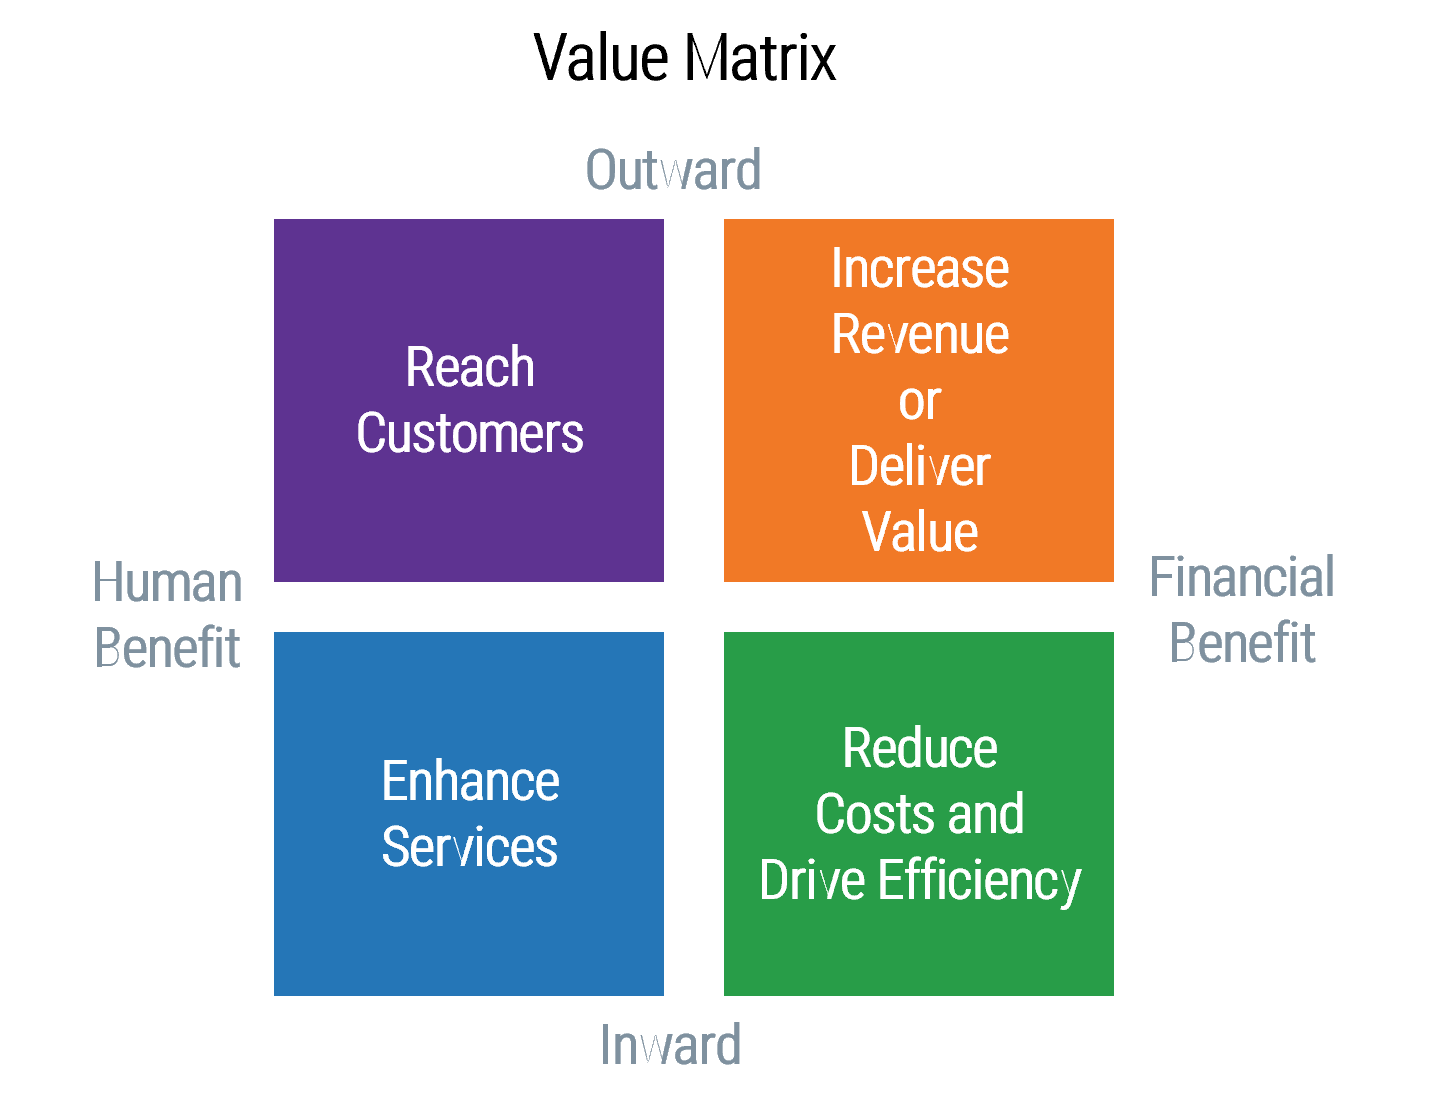 The image contains a screenshot of a value matrix.